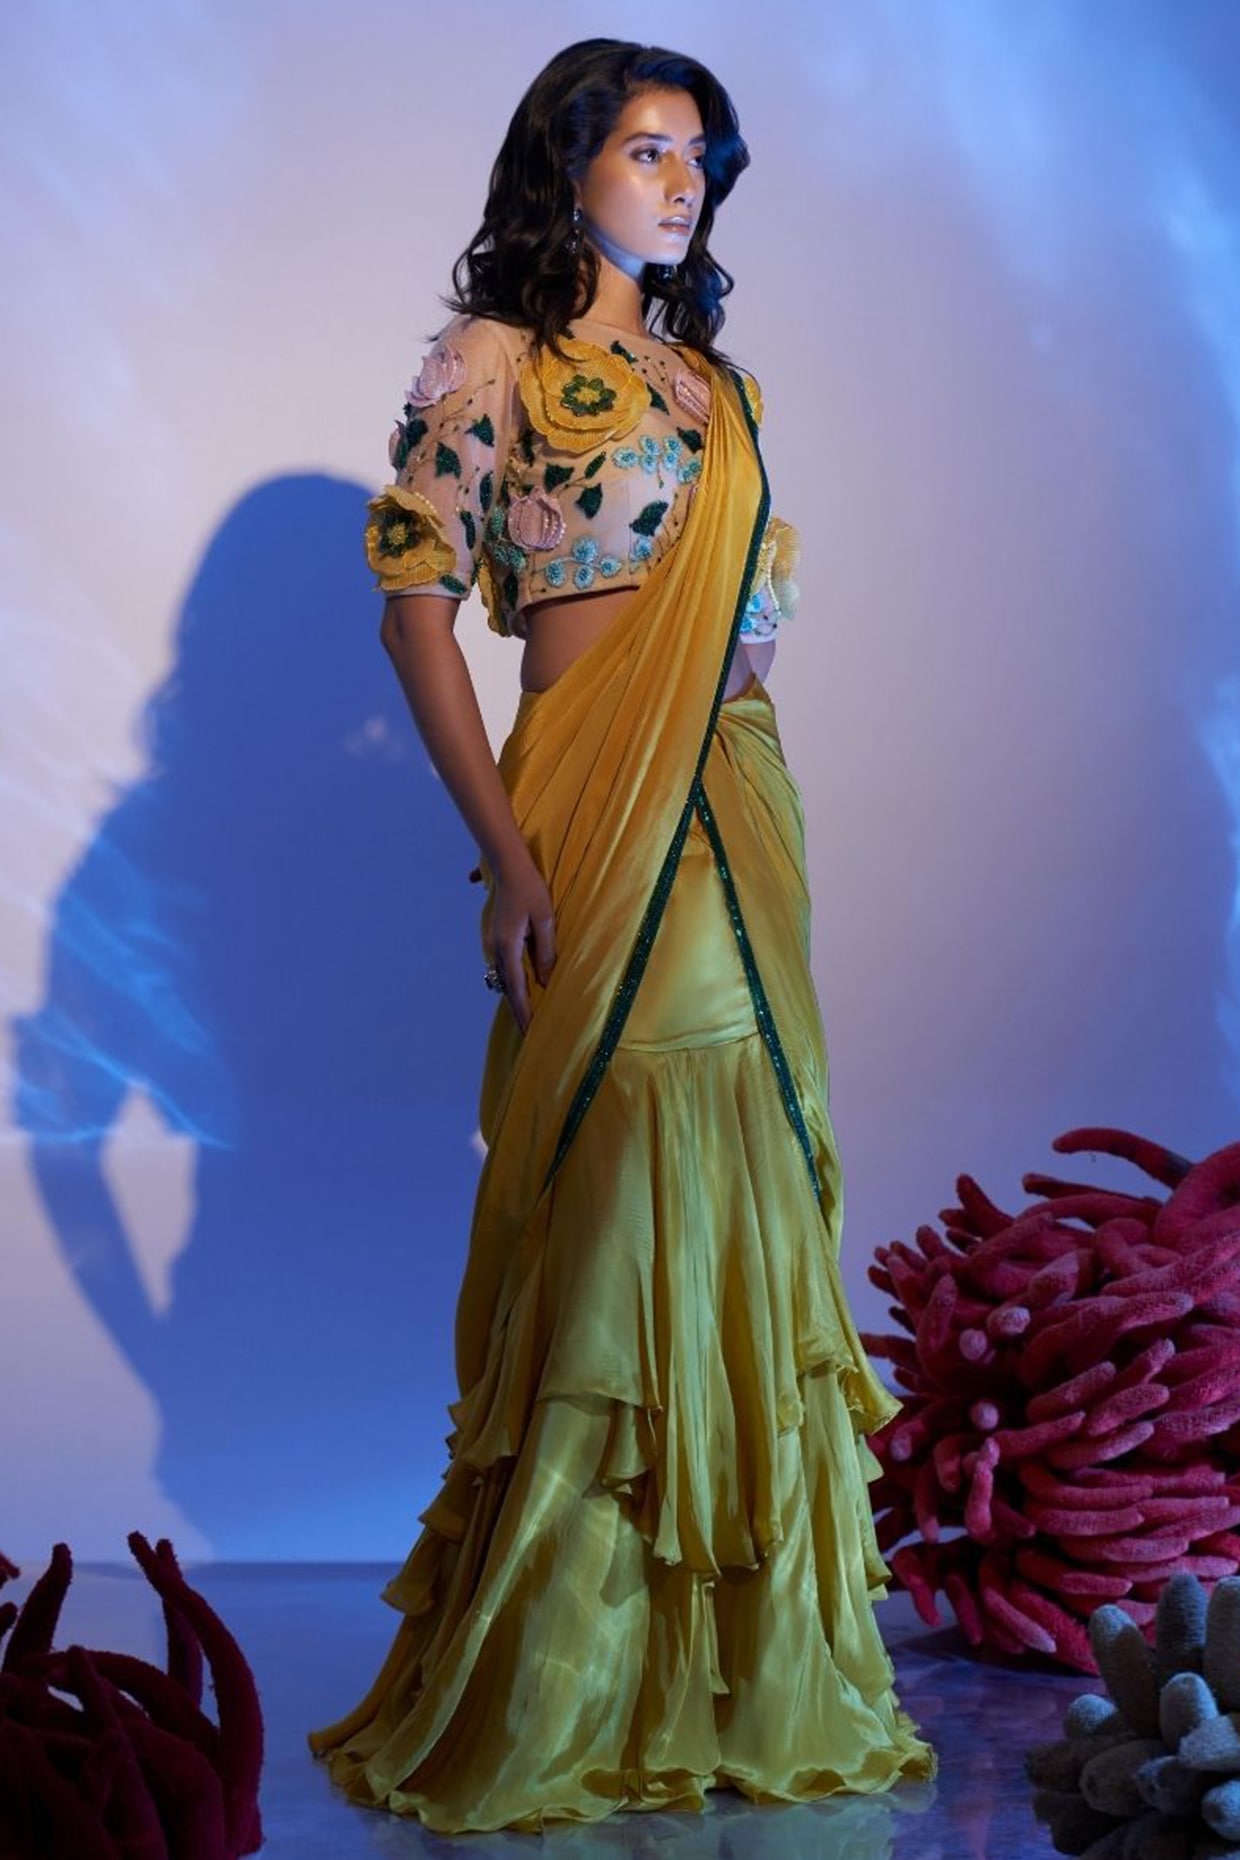 Buy Aradhana Fashion Women's Engrossing Readymade Cotton Nauvari Saree  (Bottle Green) at Amazon.in